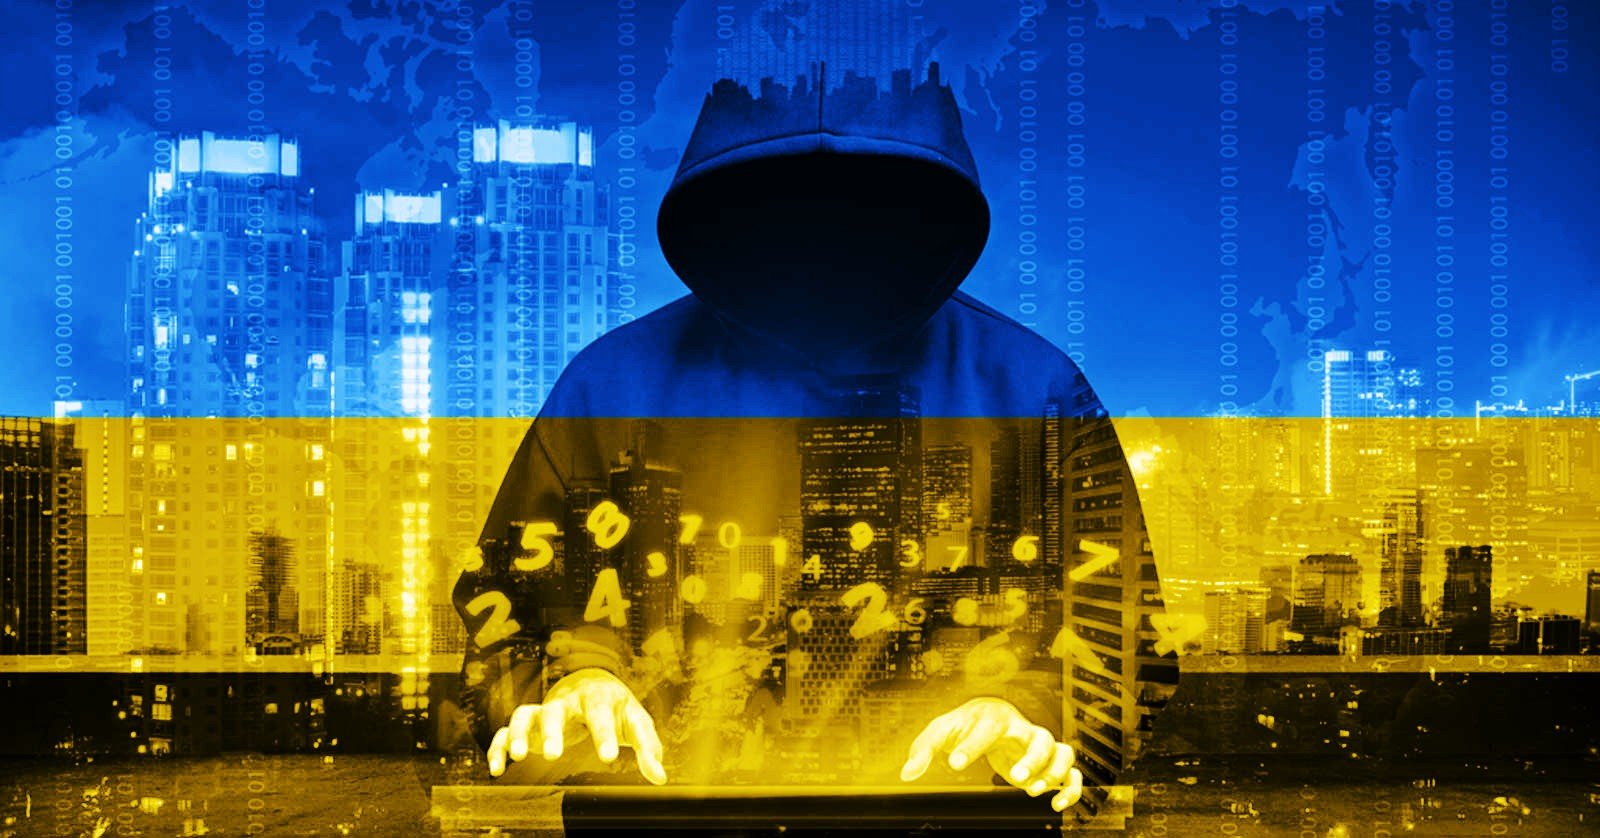 Ukraine says Russian hacktivists use new Somnia ransomware